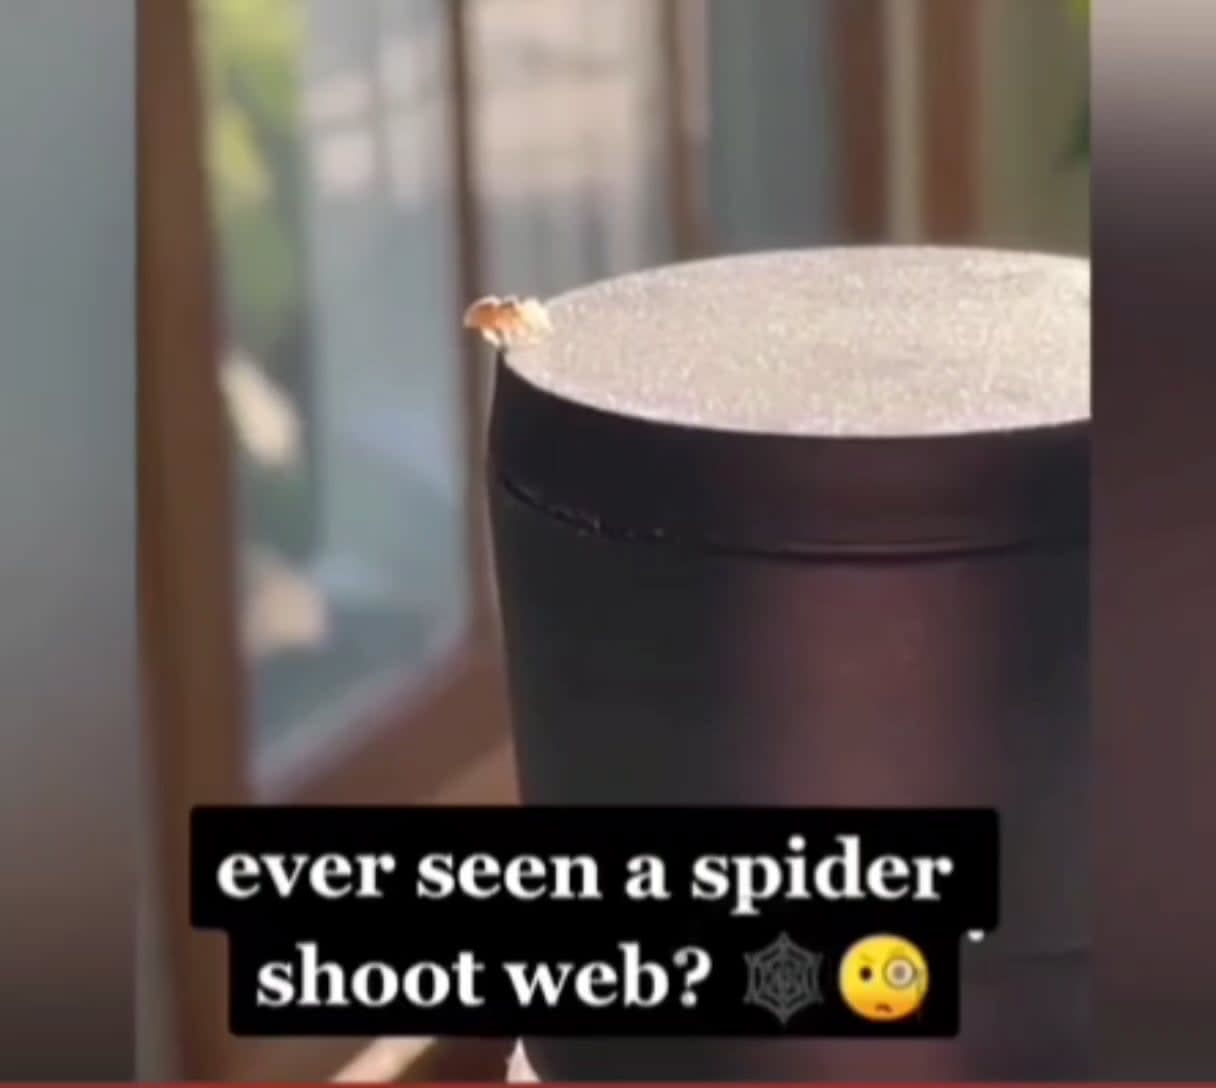 Spider shoot webs